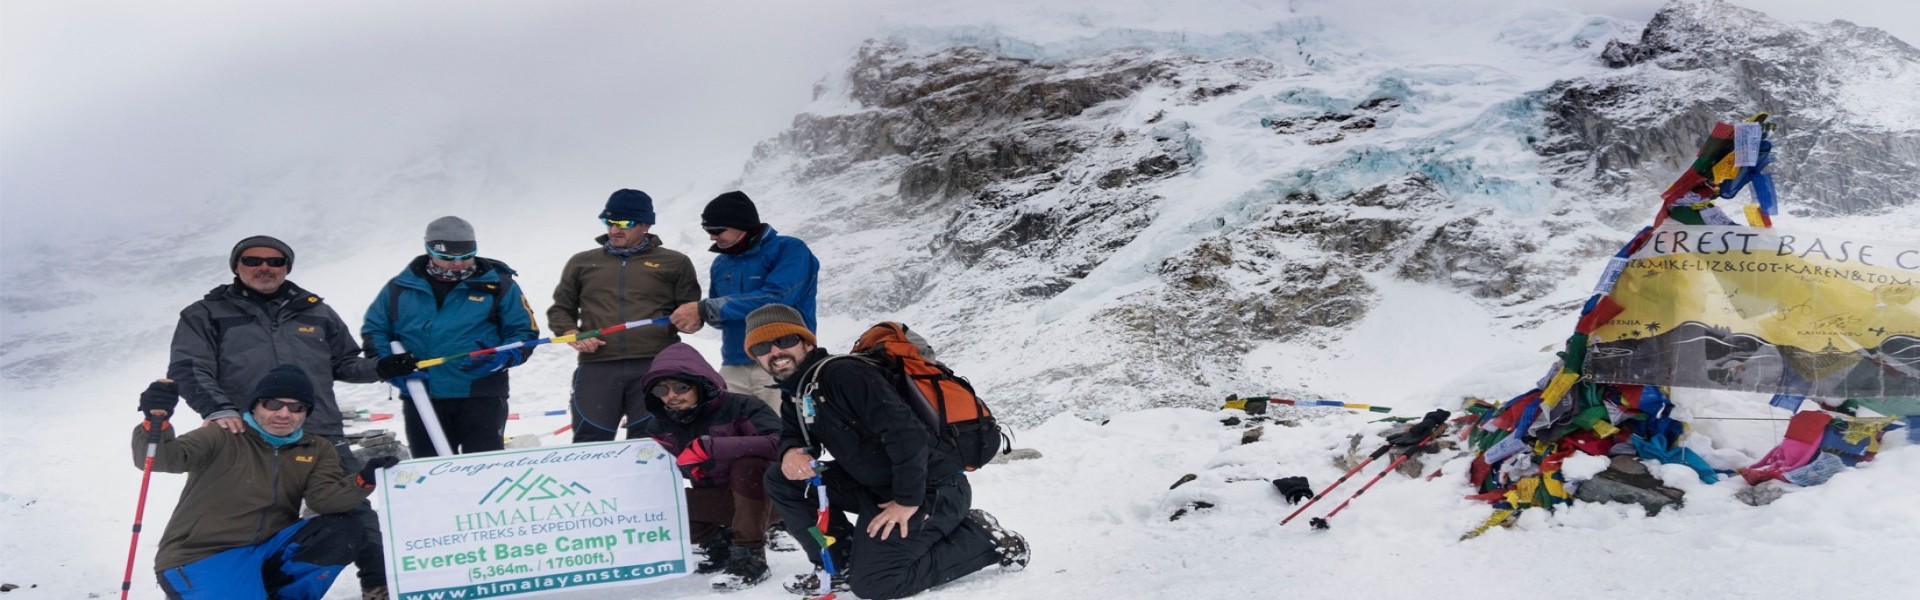 Mt. Everest Base Camp Trek 2019/2020